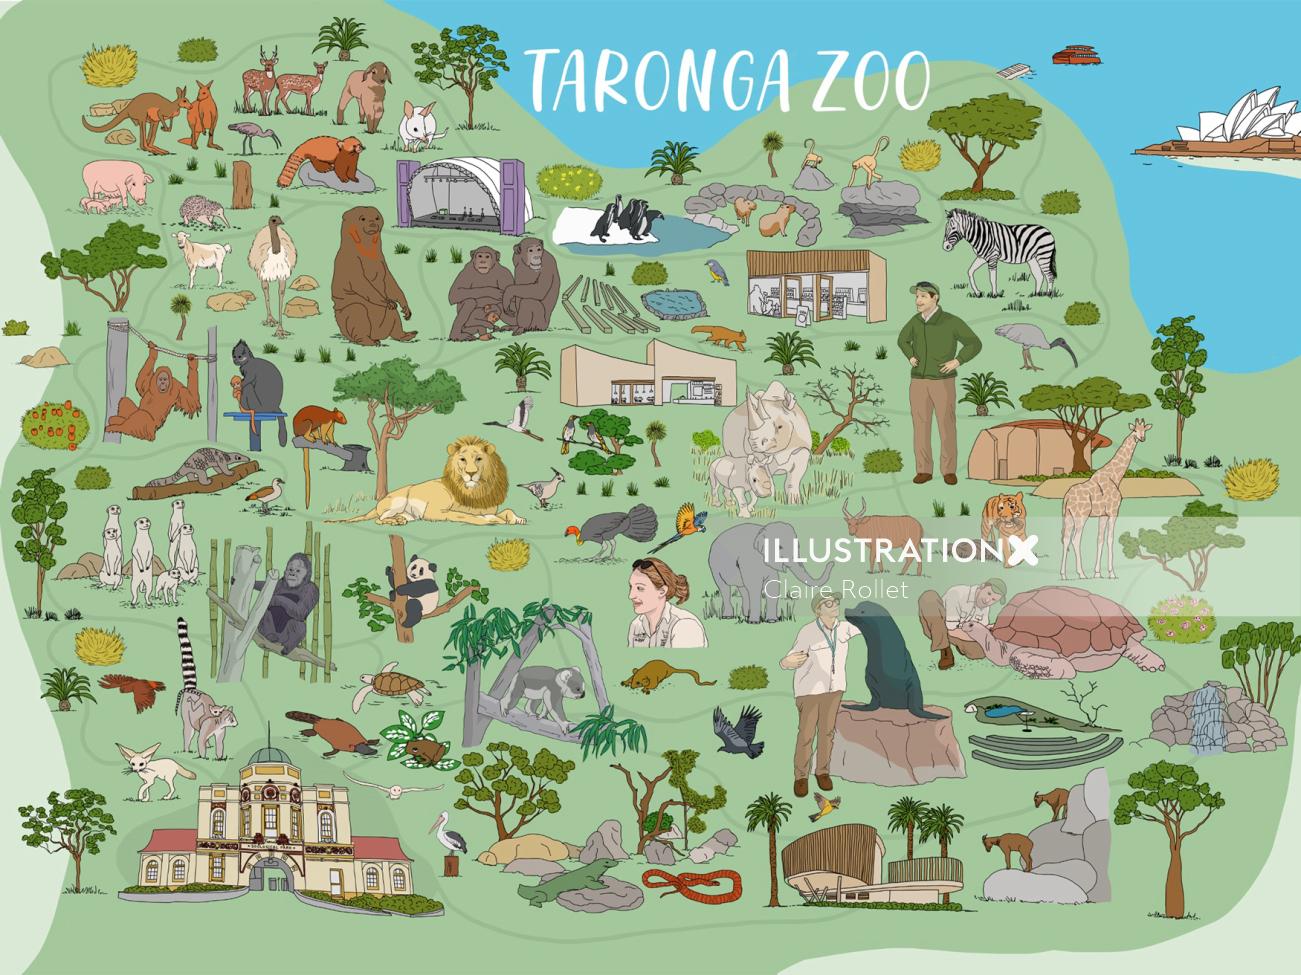 Map illustration of Taronga Zoo for Viasat TV